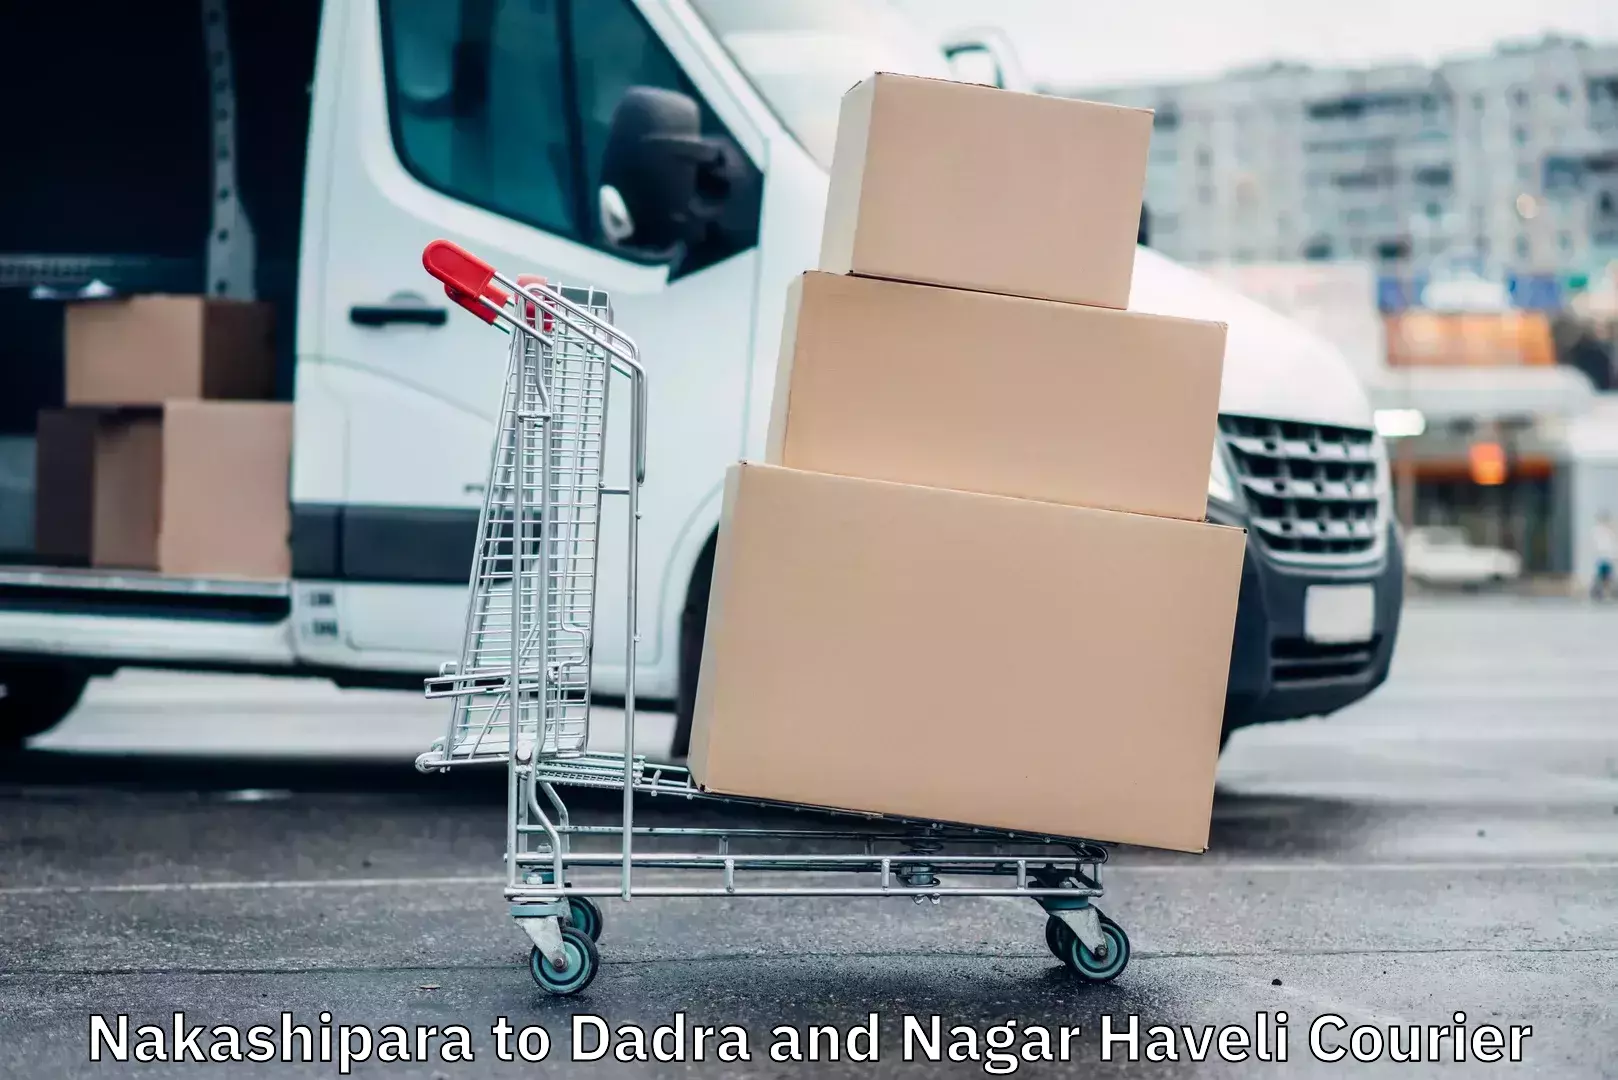 Efficient courier operations in Nakashipara to Dadra and Nagar Haveli